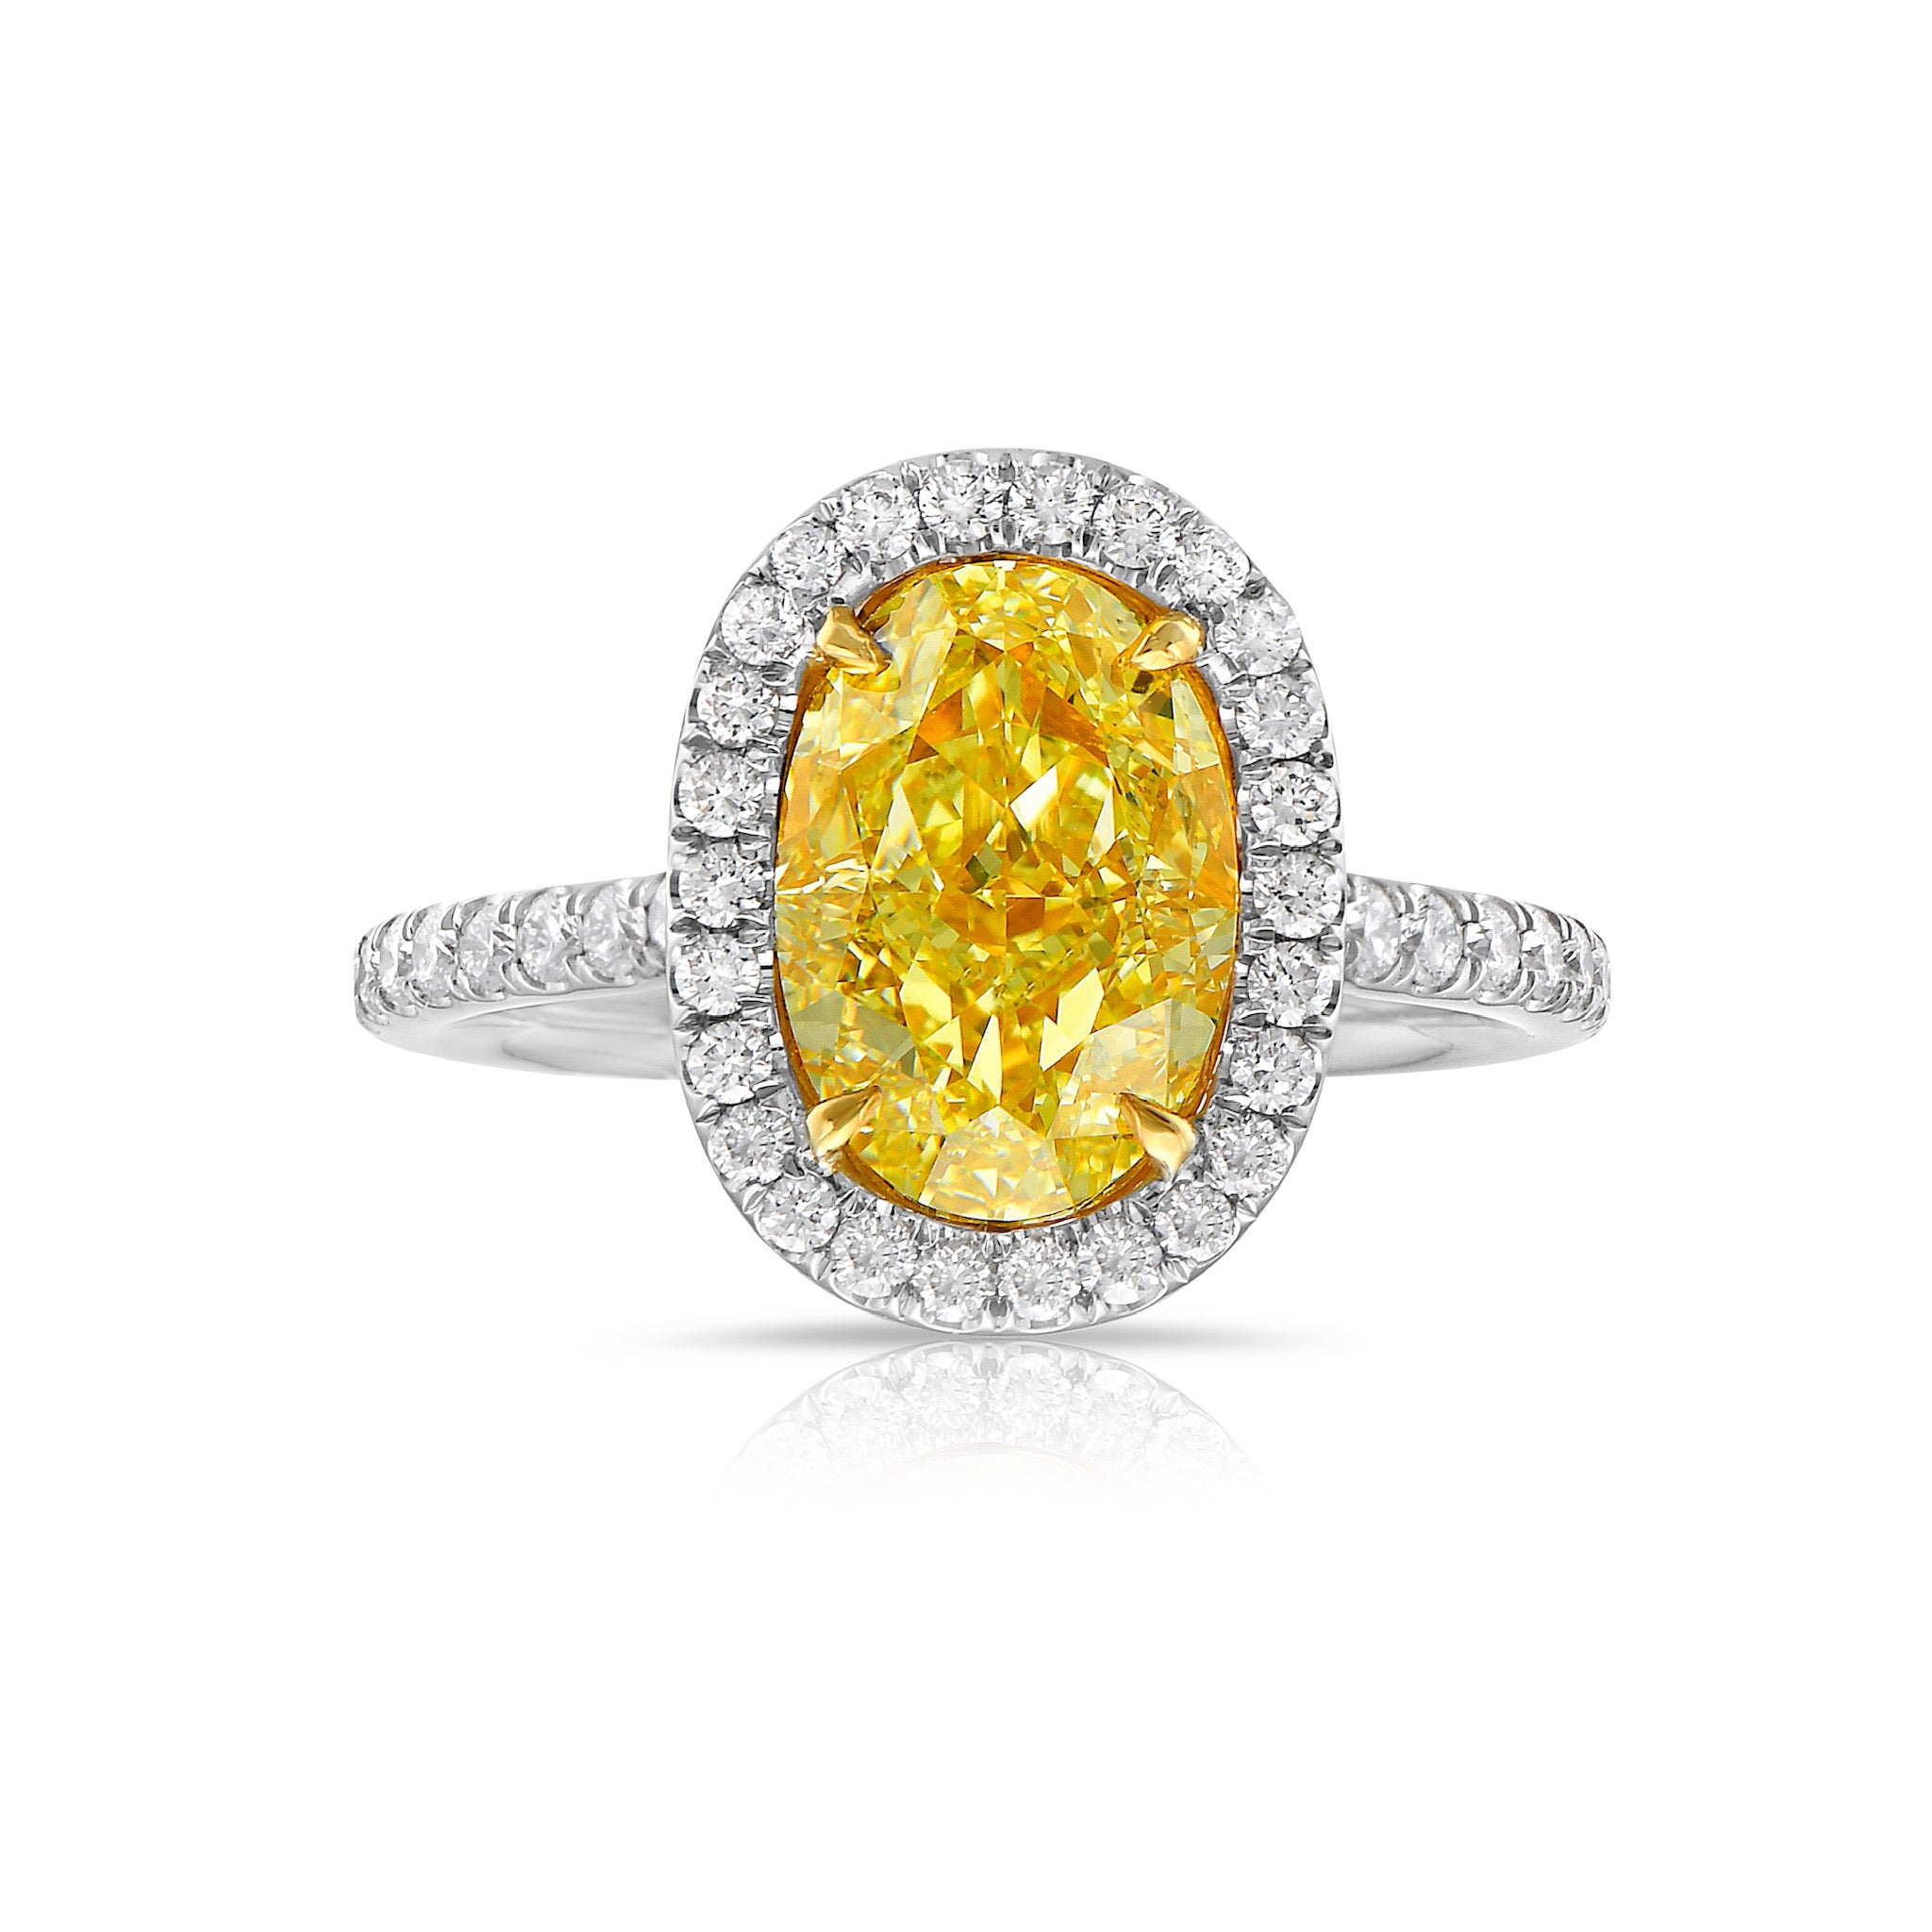 3.04ct Fancy Yellow Oval Diamond Ring